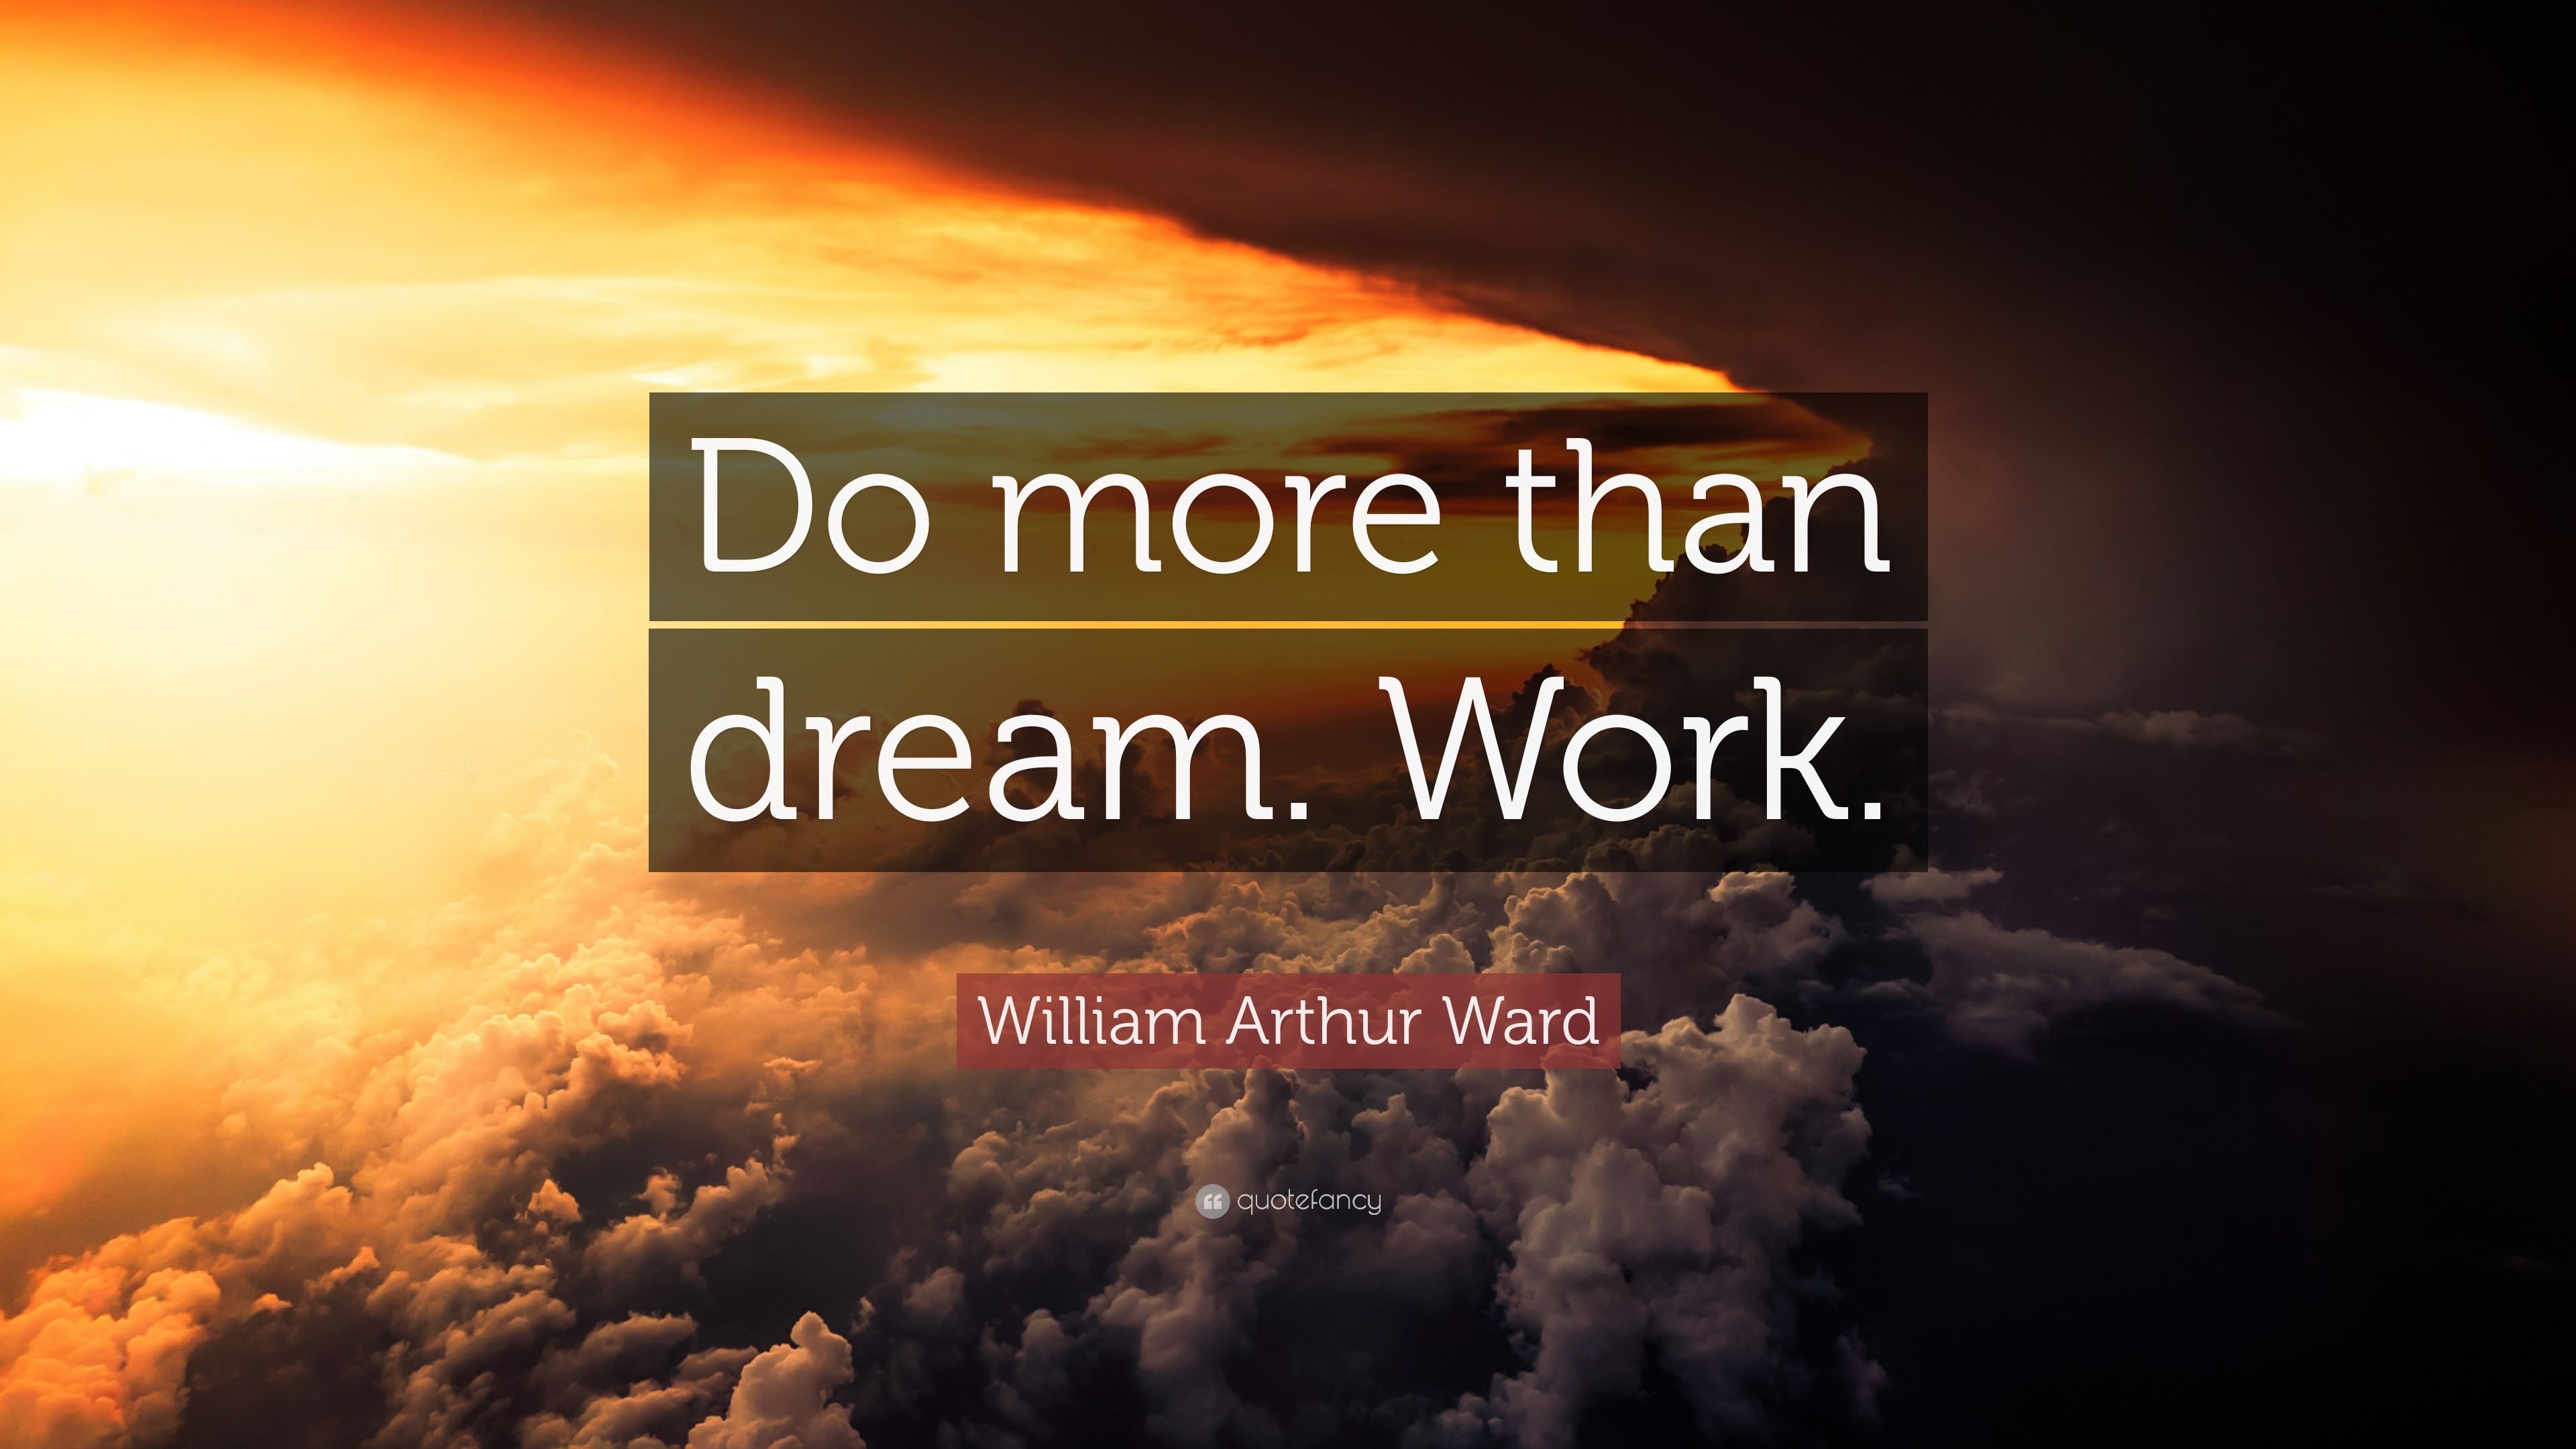 William Arthur Ward Quote: “Do more than dream. Work.” (12 wallpaper)